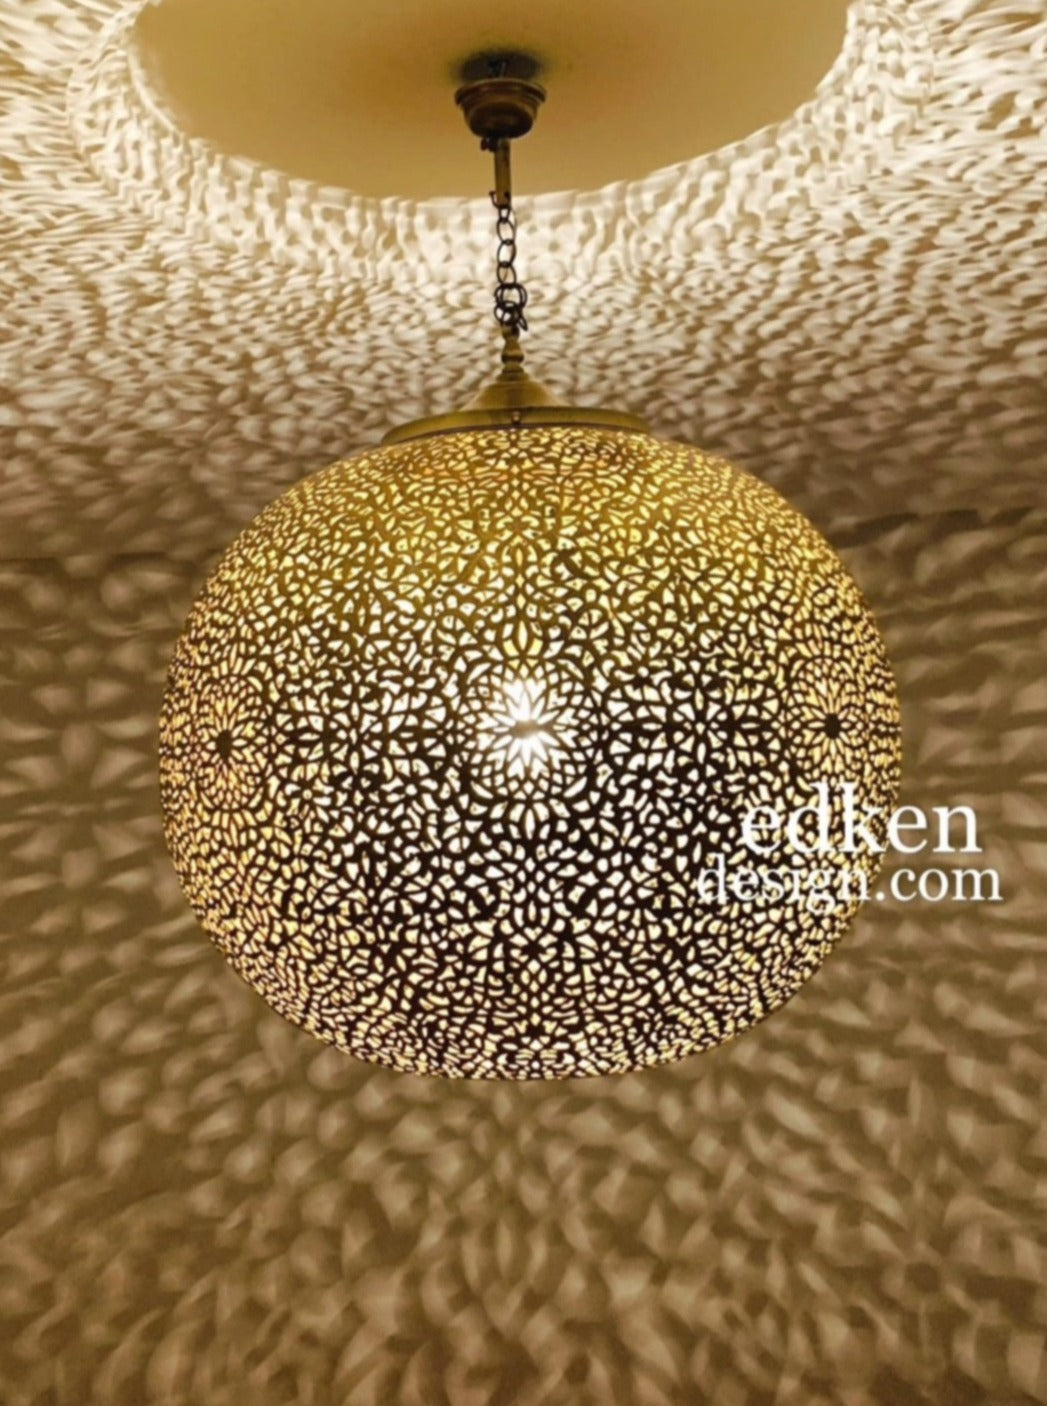 EDKEN LIGHTS - Morocco Ceiling Lamp Shades Globe Shape Fixture Ball pierced Moorish Design Hanging Brass Lights